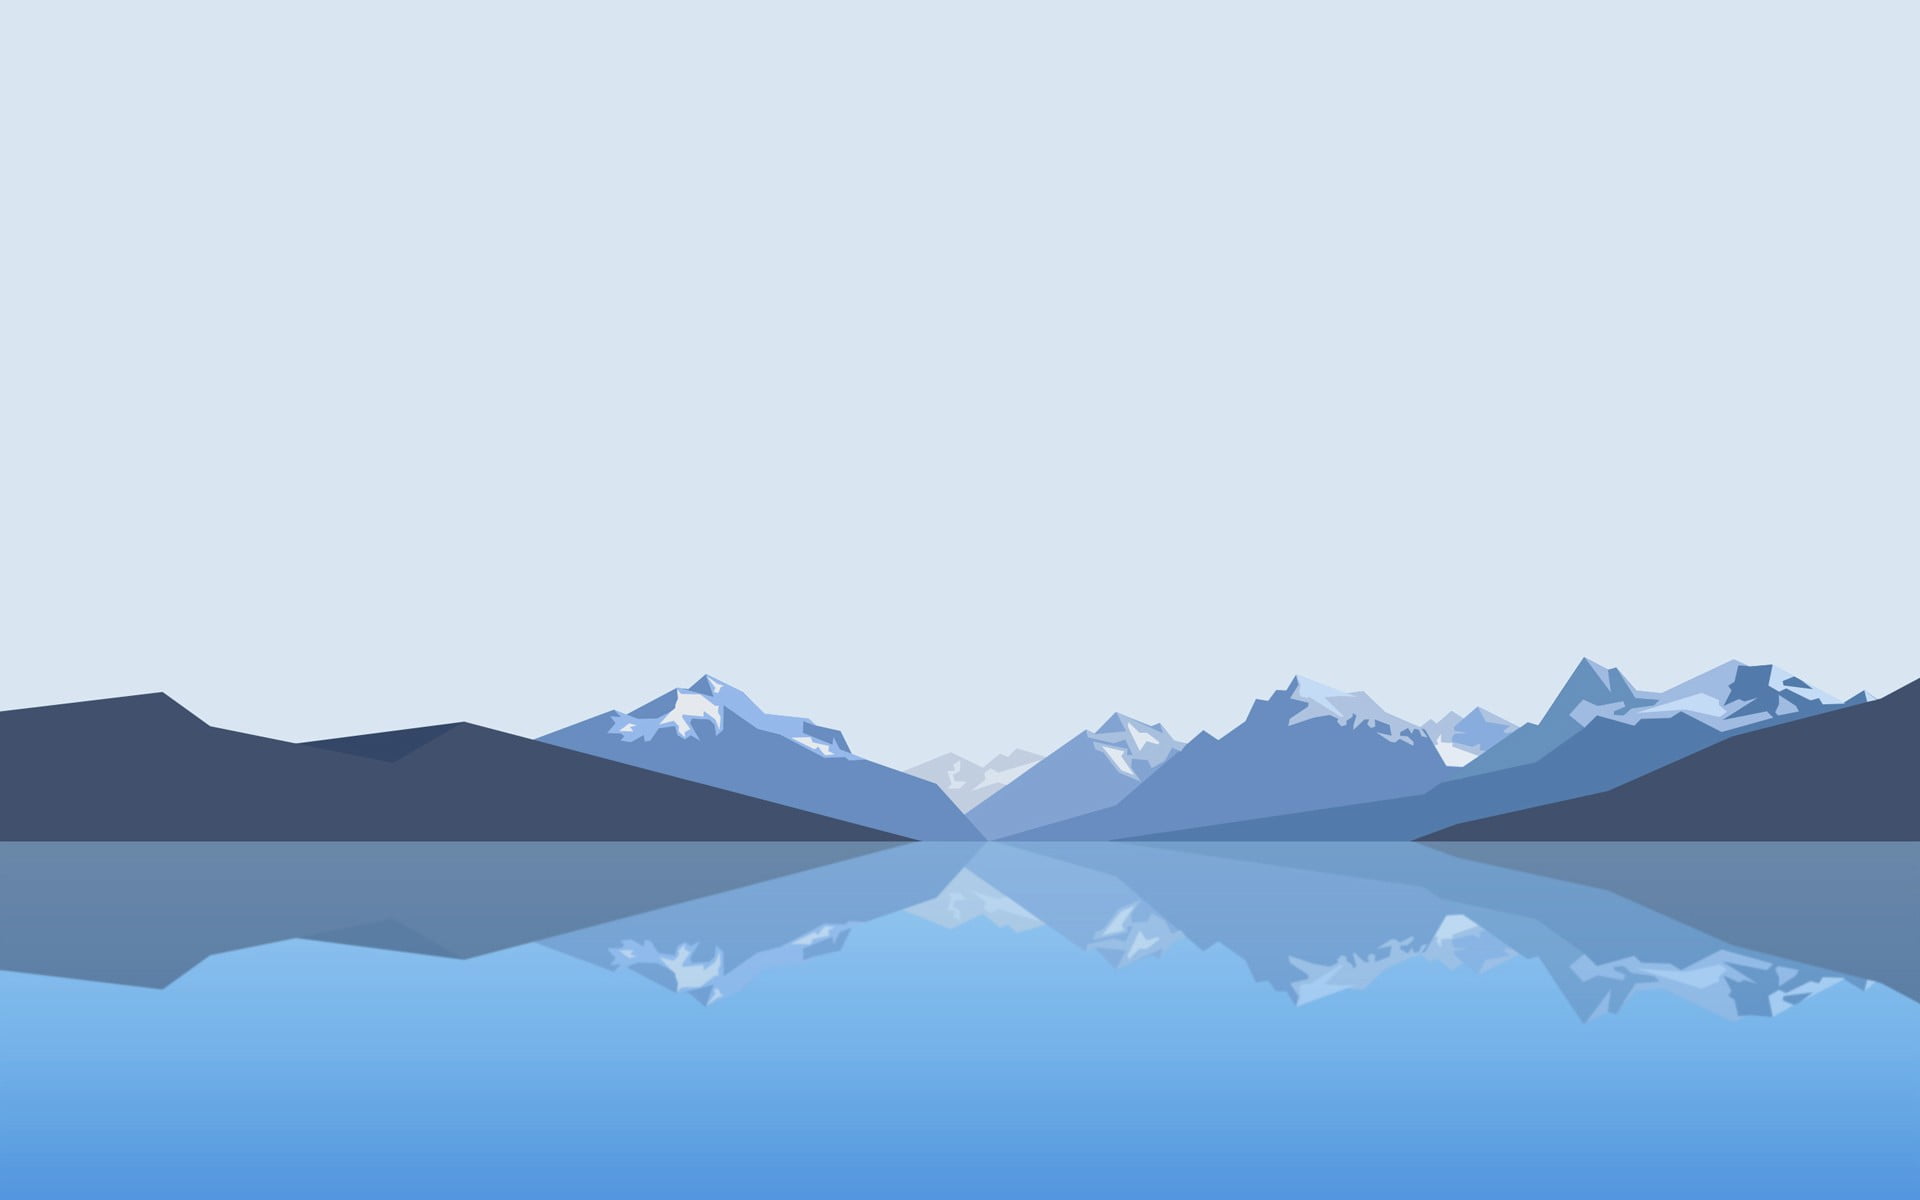 grey mountain illustration, artwork, landscape, reflection, nature